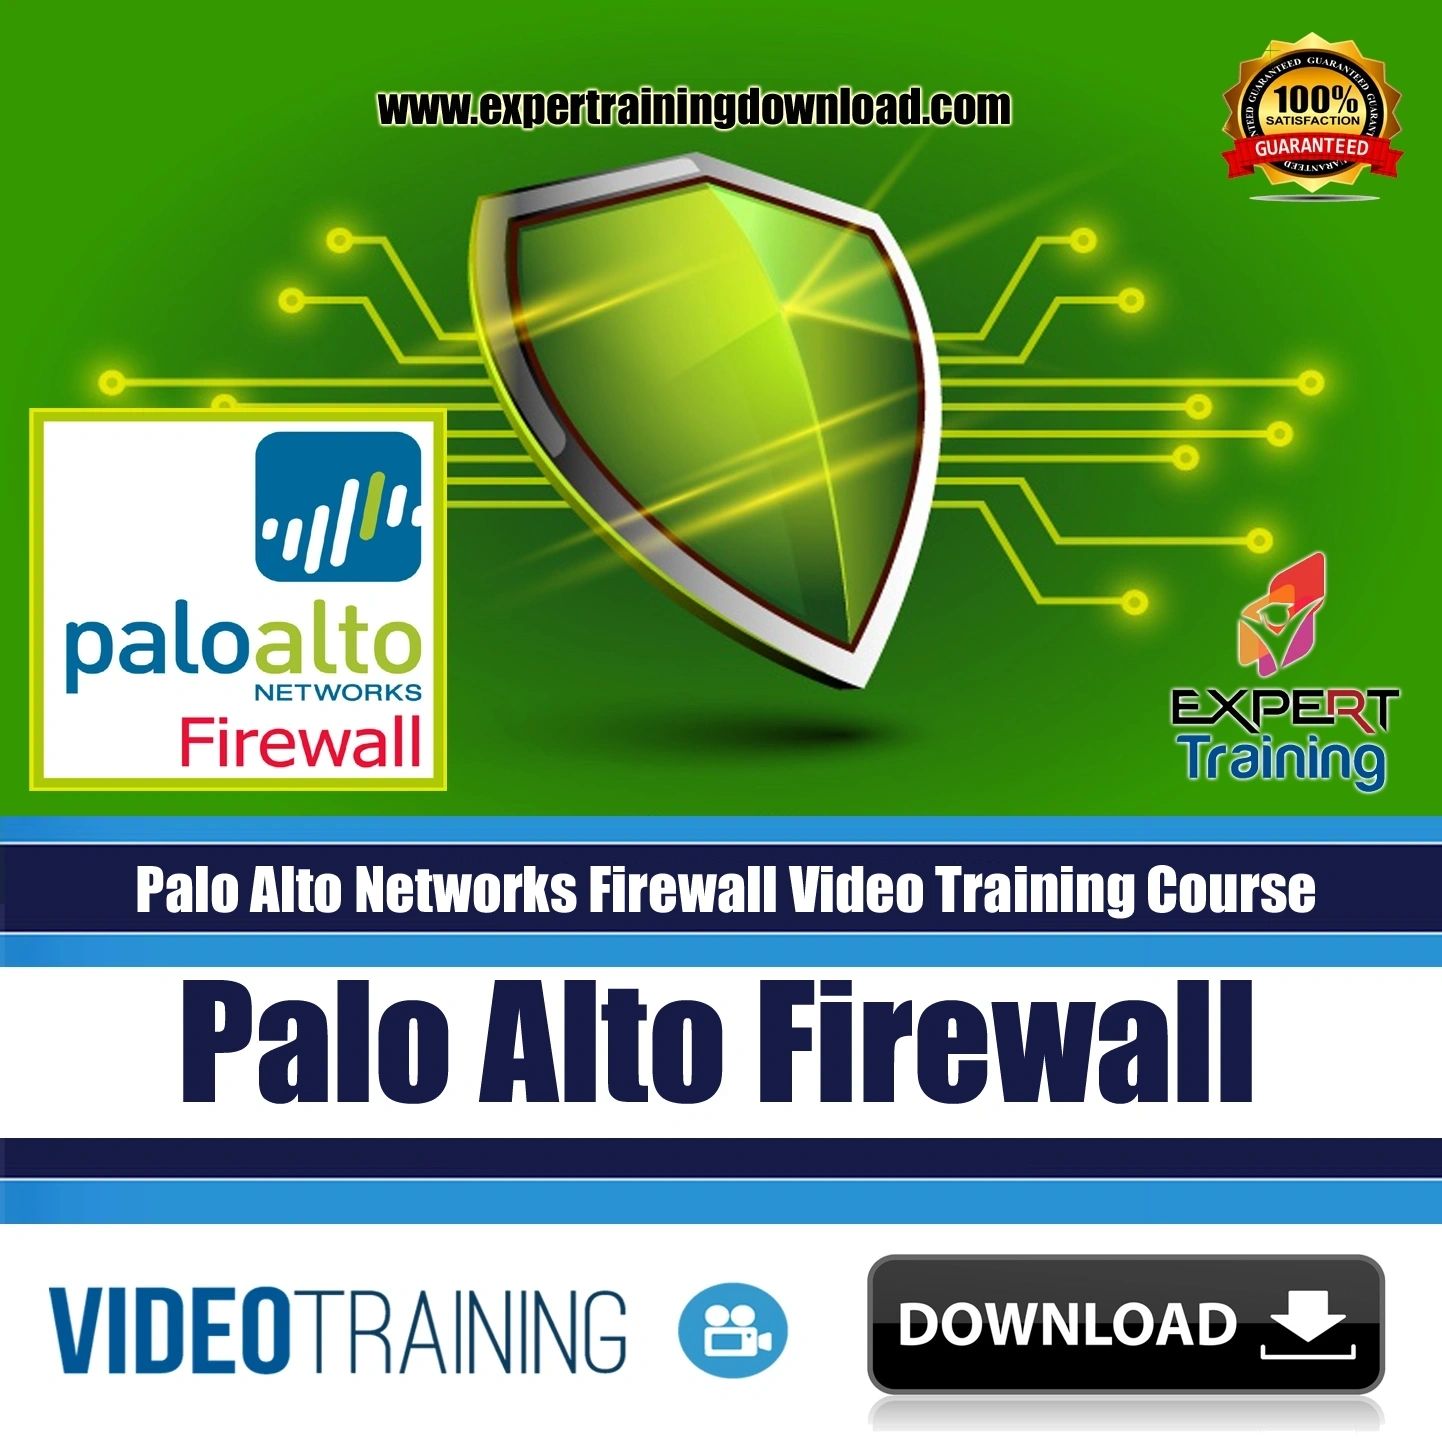 Palo Alto Firewall Video Training Course & PDF Guides